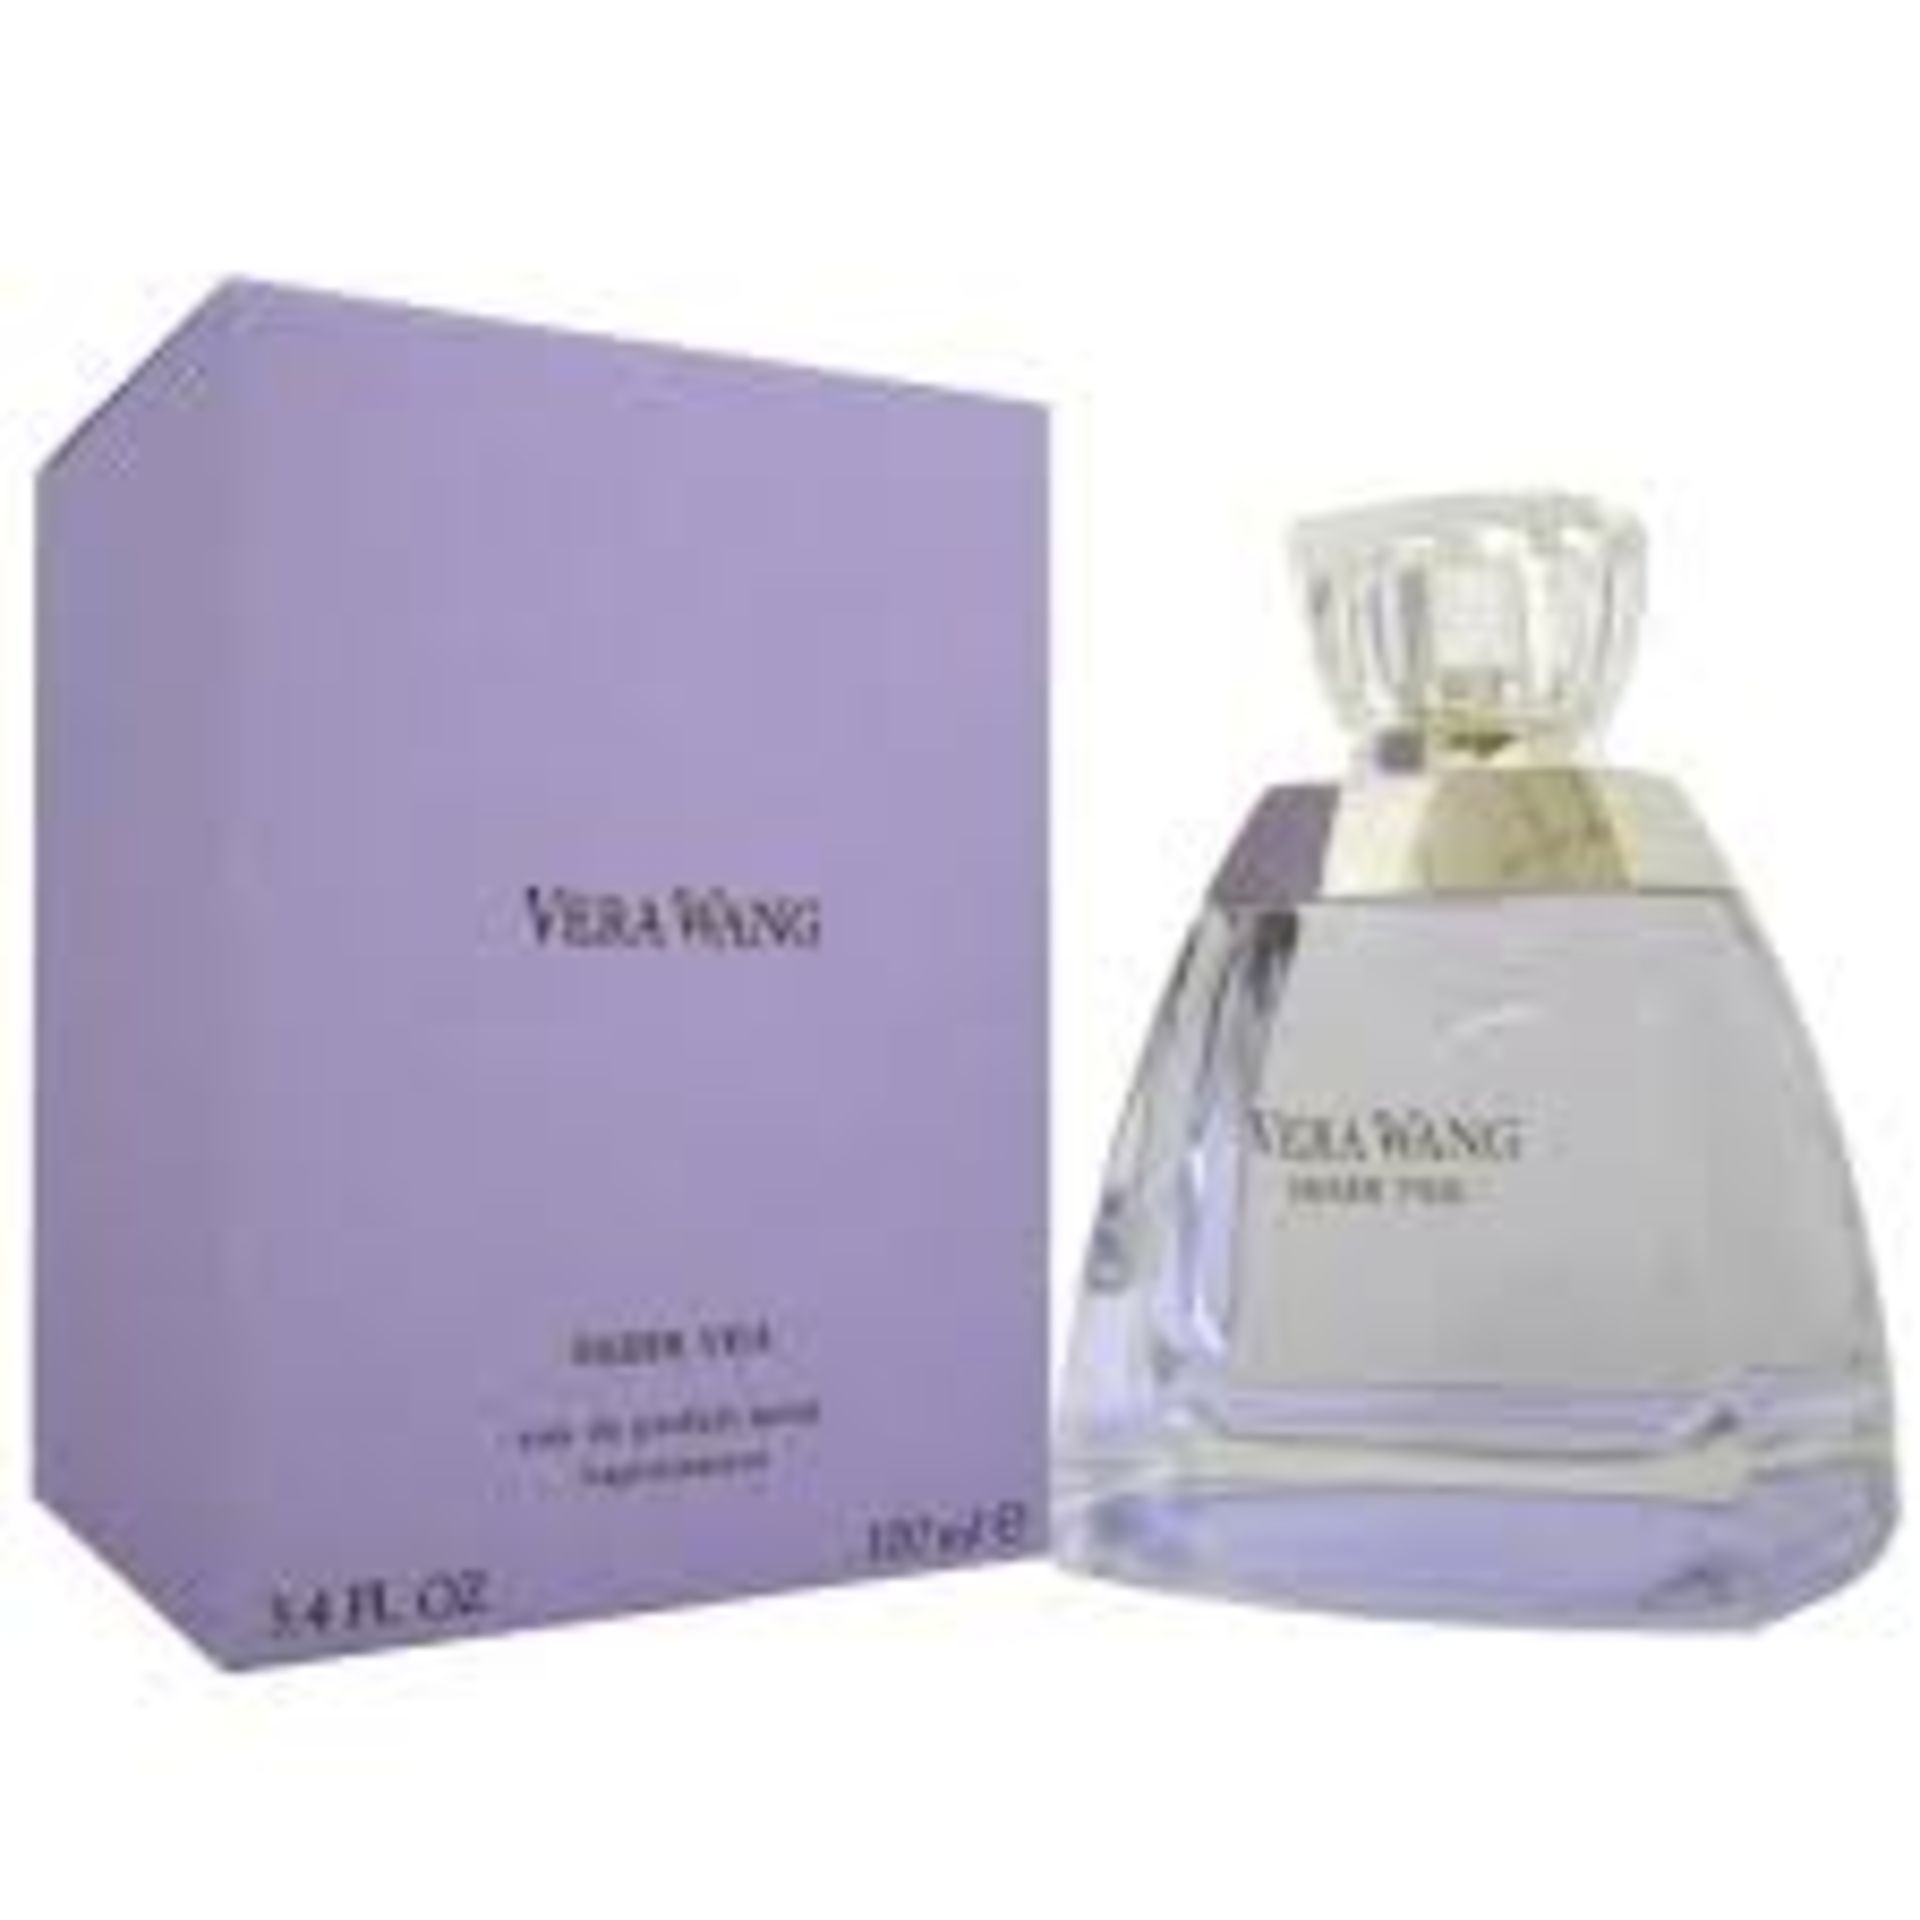 V Brand New Vera Wang Sheer Veil 100 ml EDP spray - Price Perfumes Scent Direct Ltd £32.97